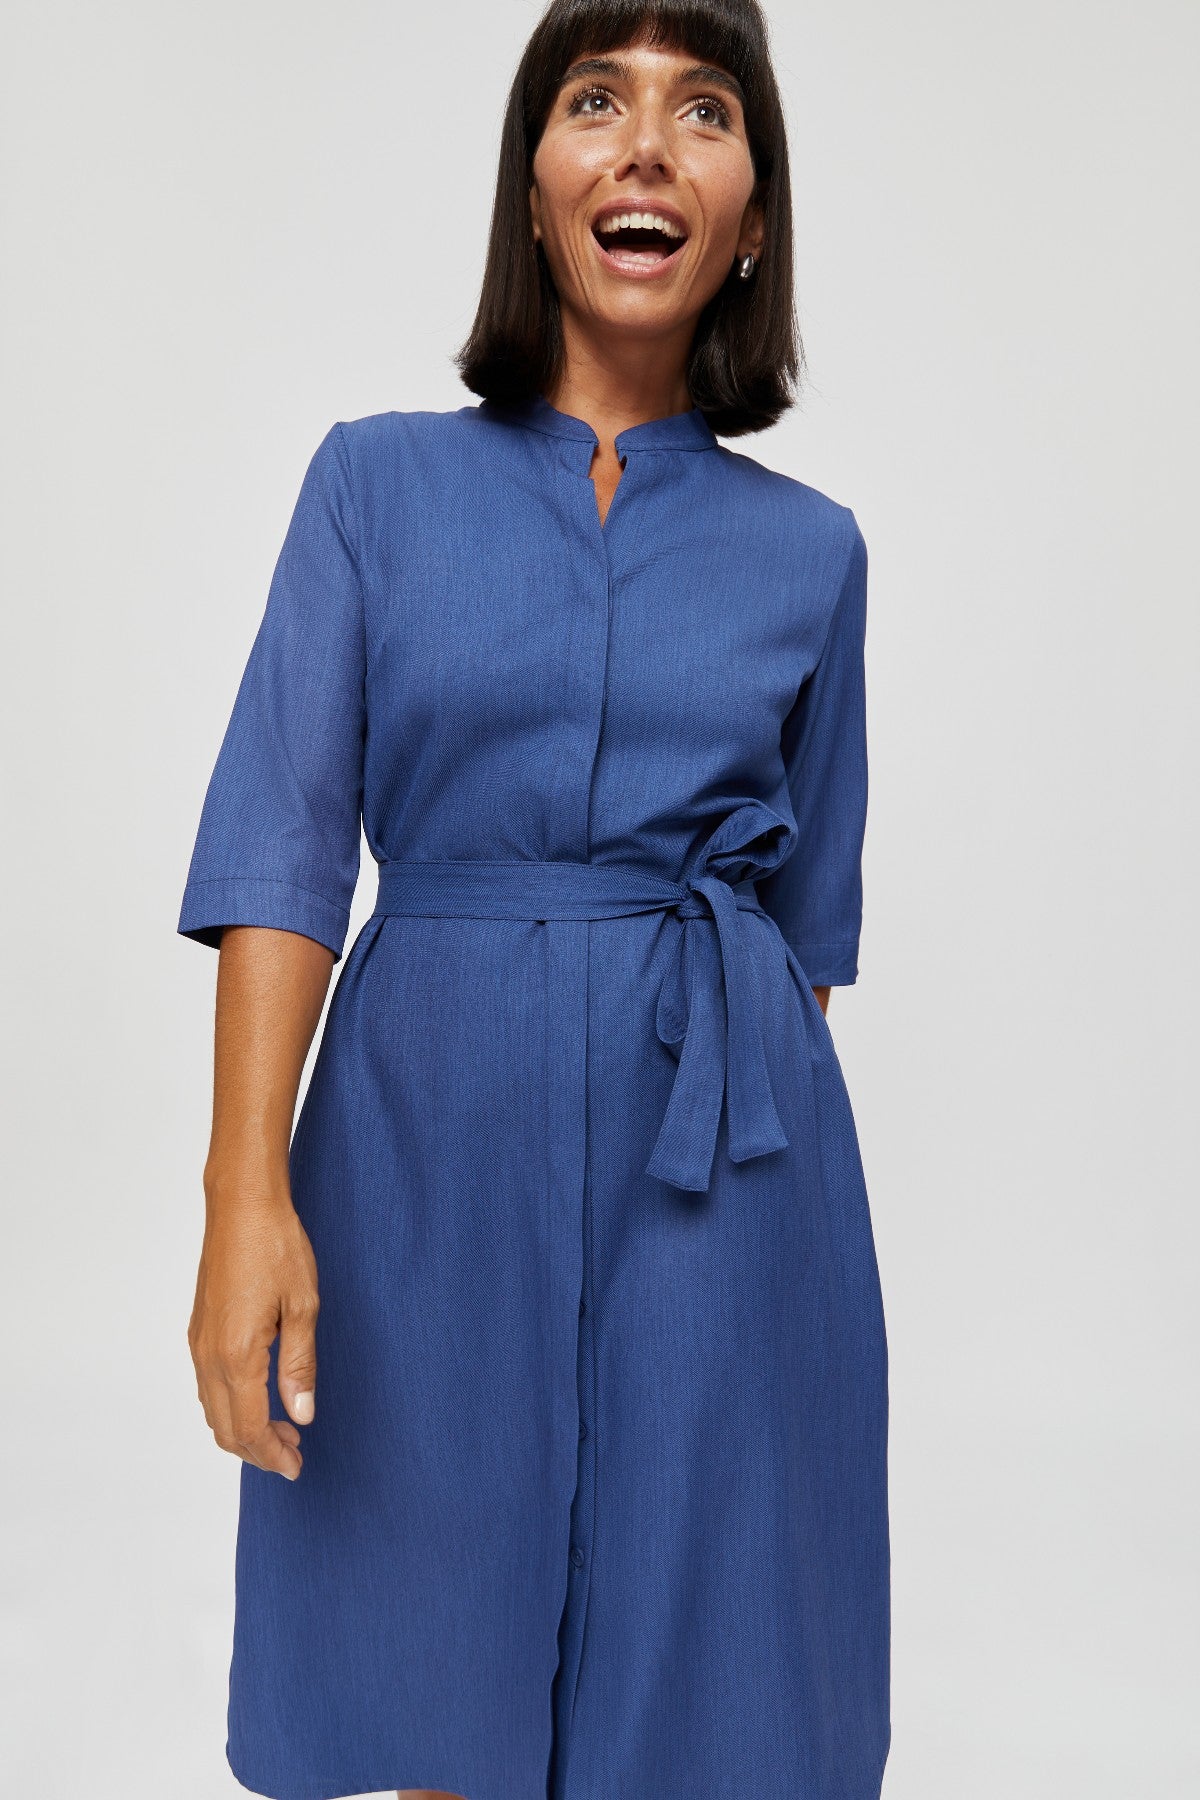 Lidia | Shirt Dress in Classic Blue